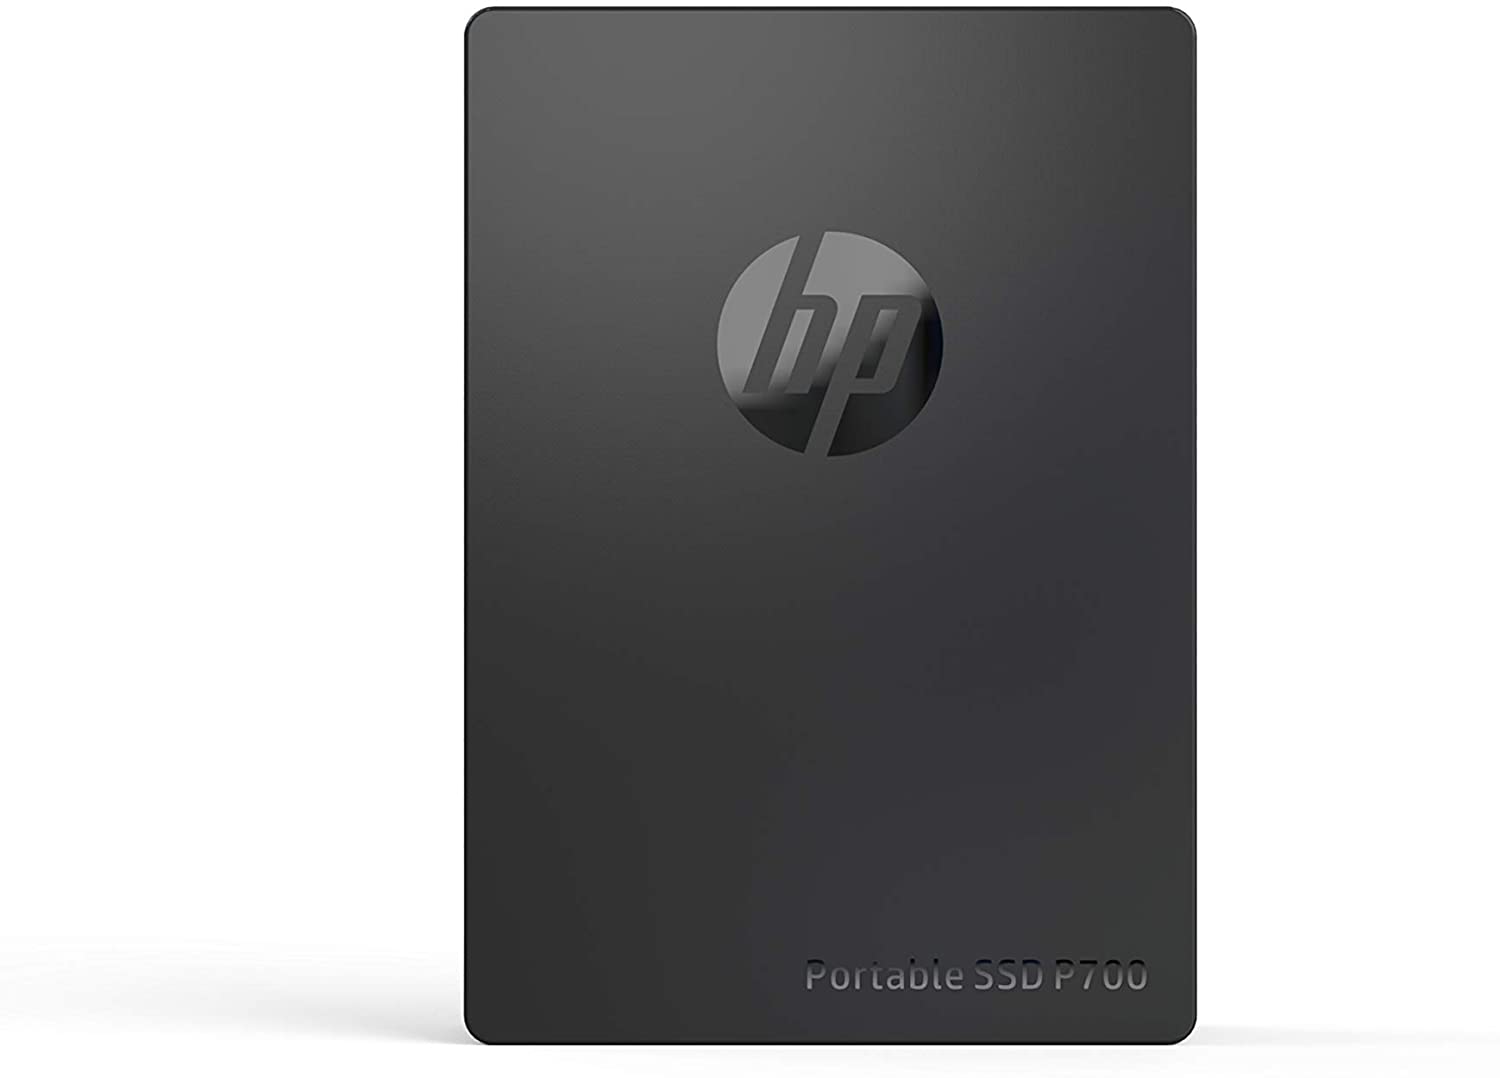 HP P700 1TB PORTABLE